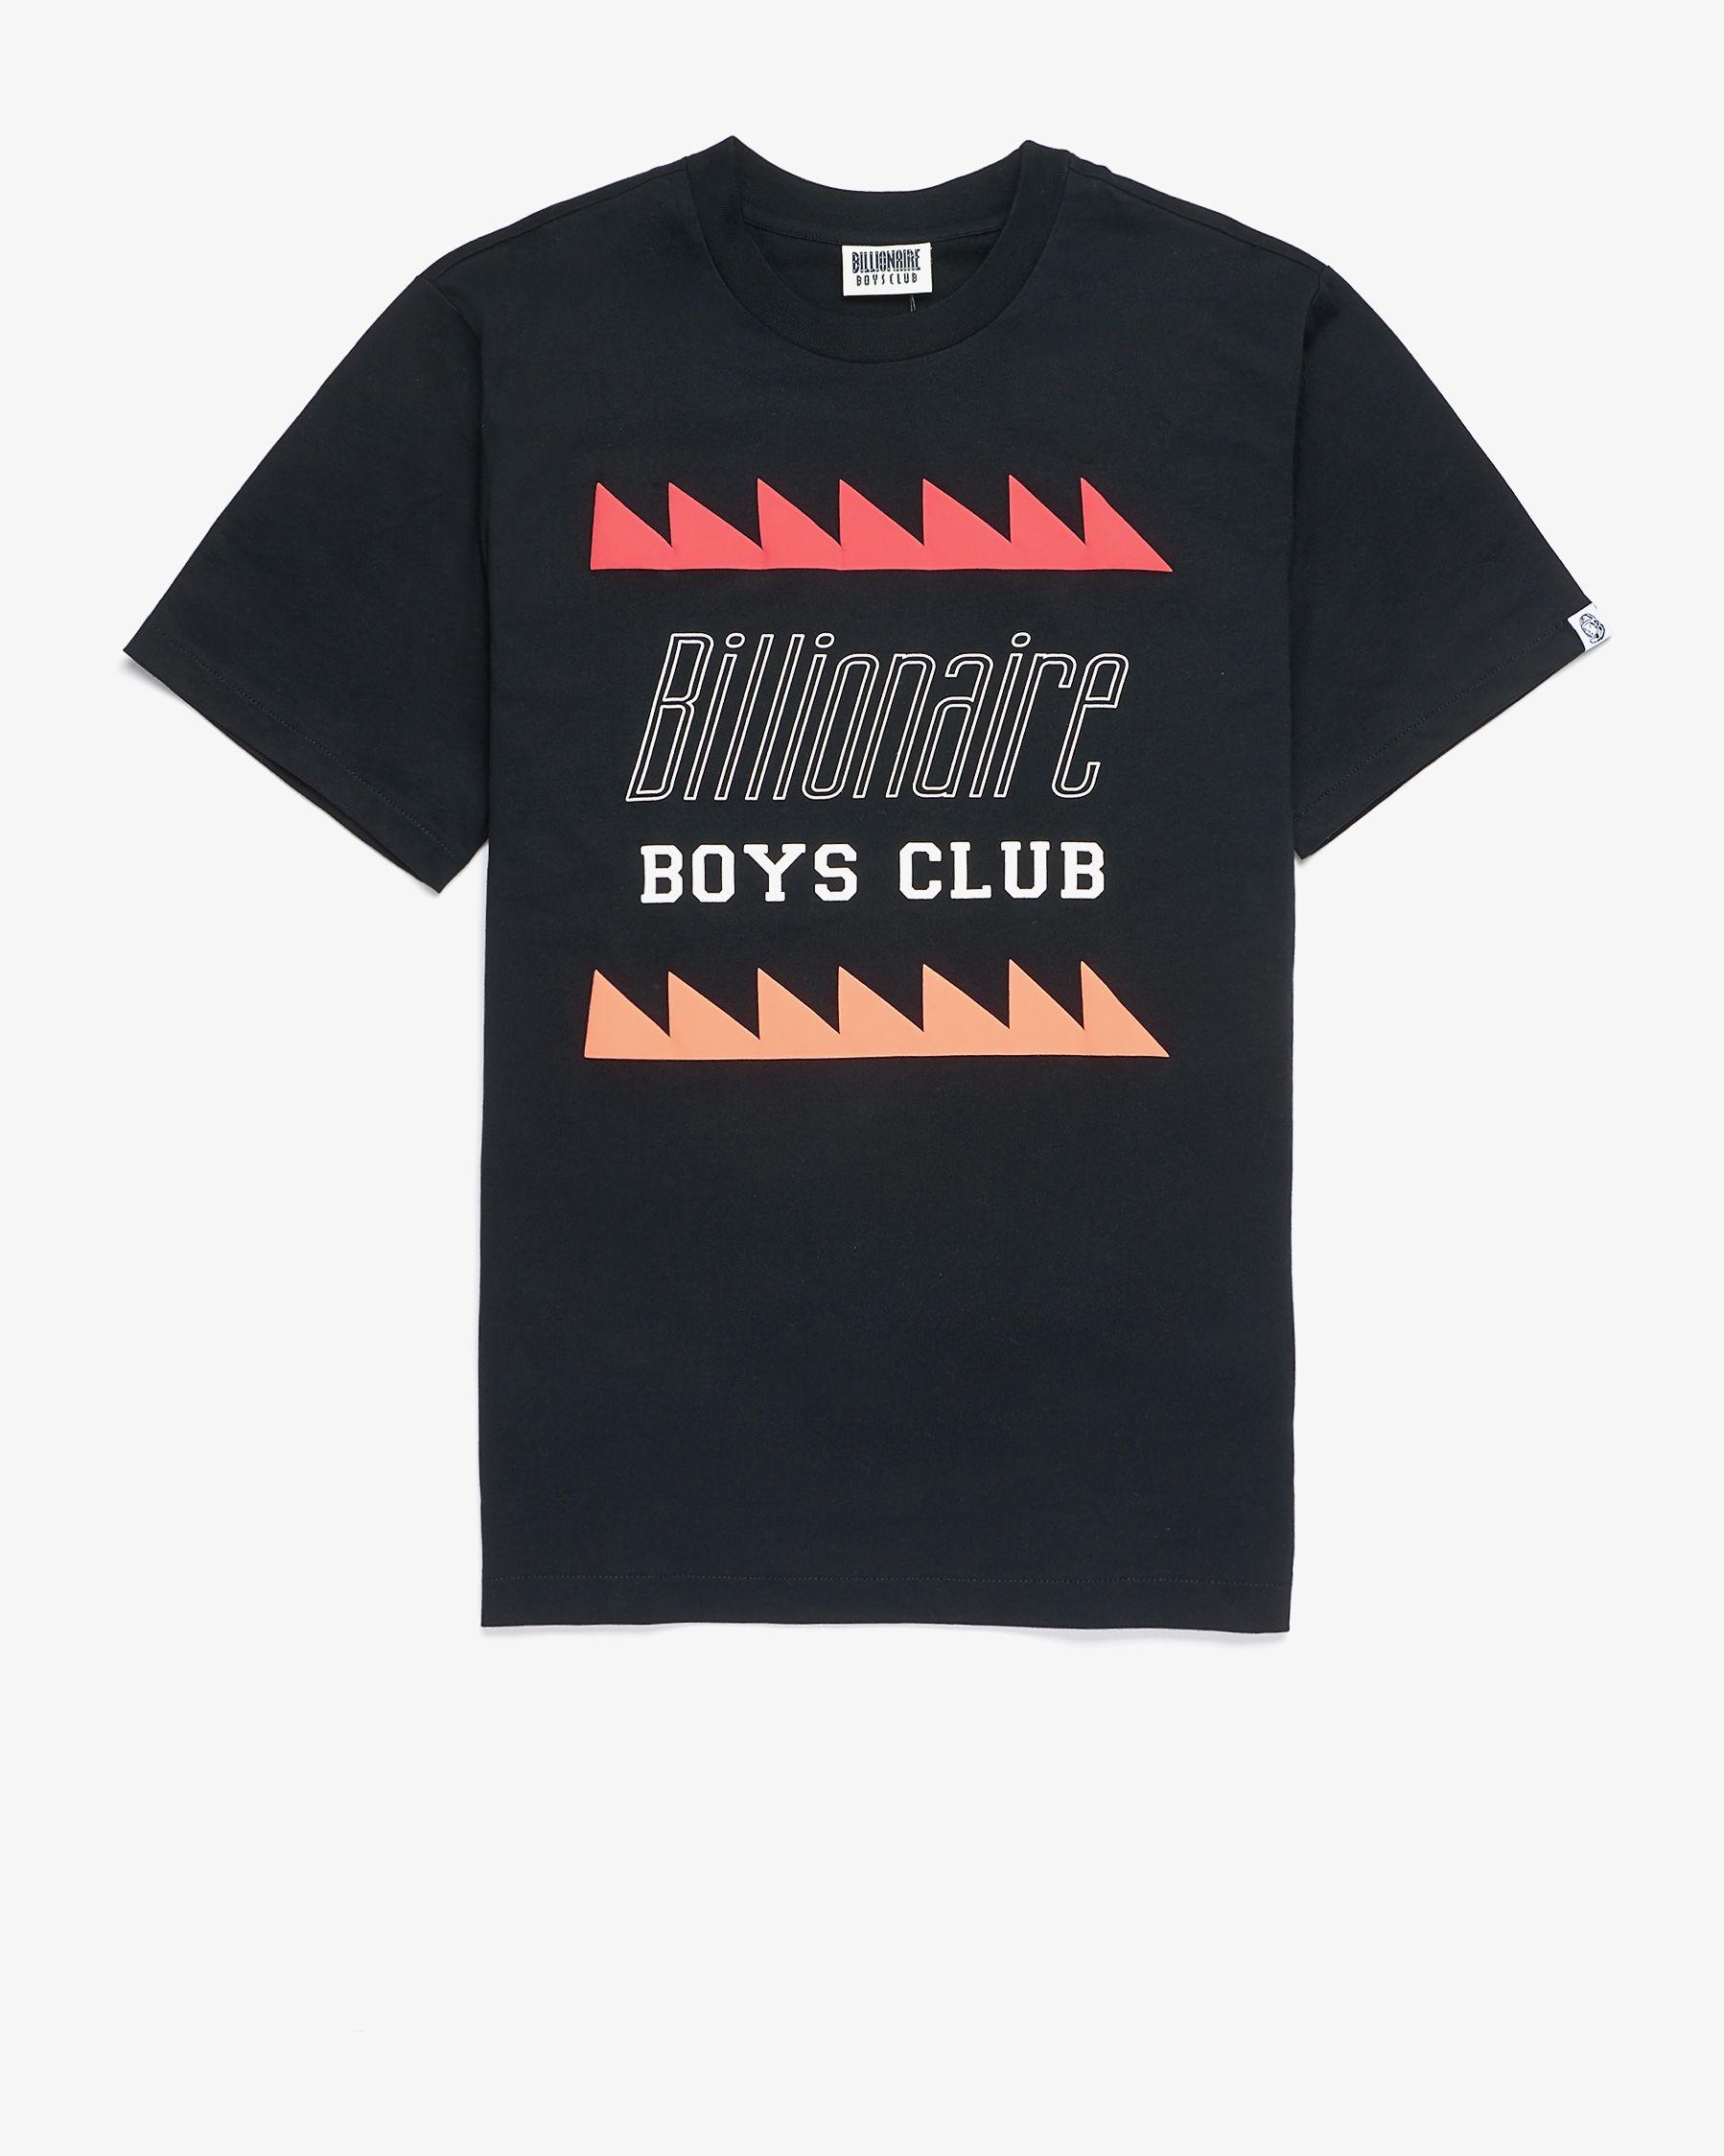 Billonaire Boys Club Logo - Buy now Billionaire Boys Club Oscillating Logo T-shirt - B19148-B